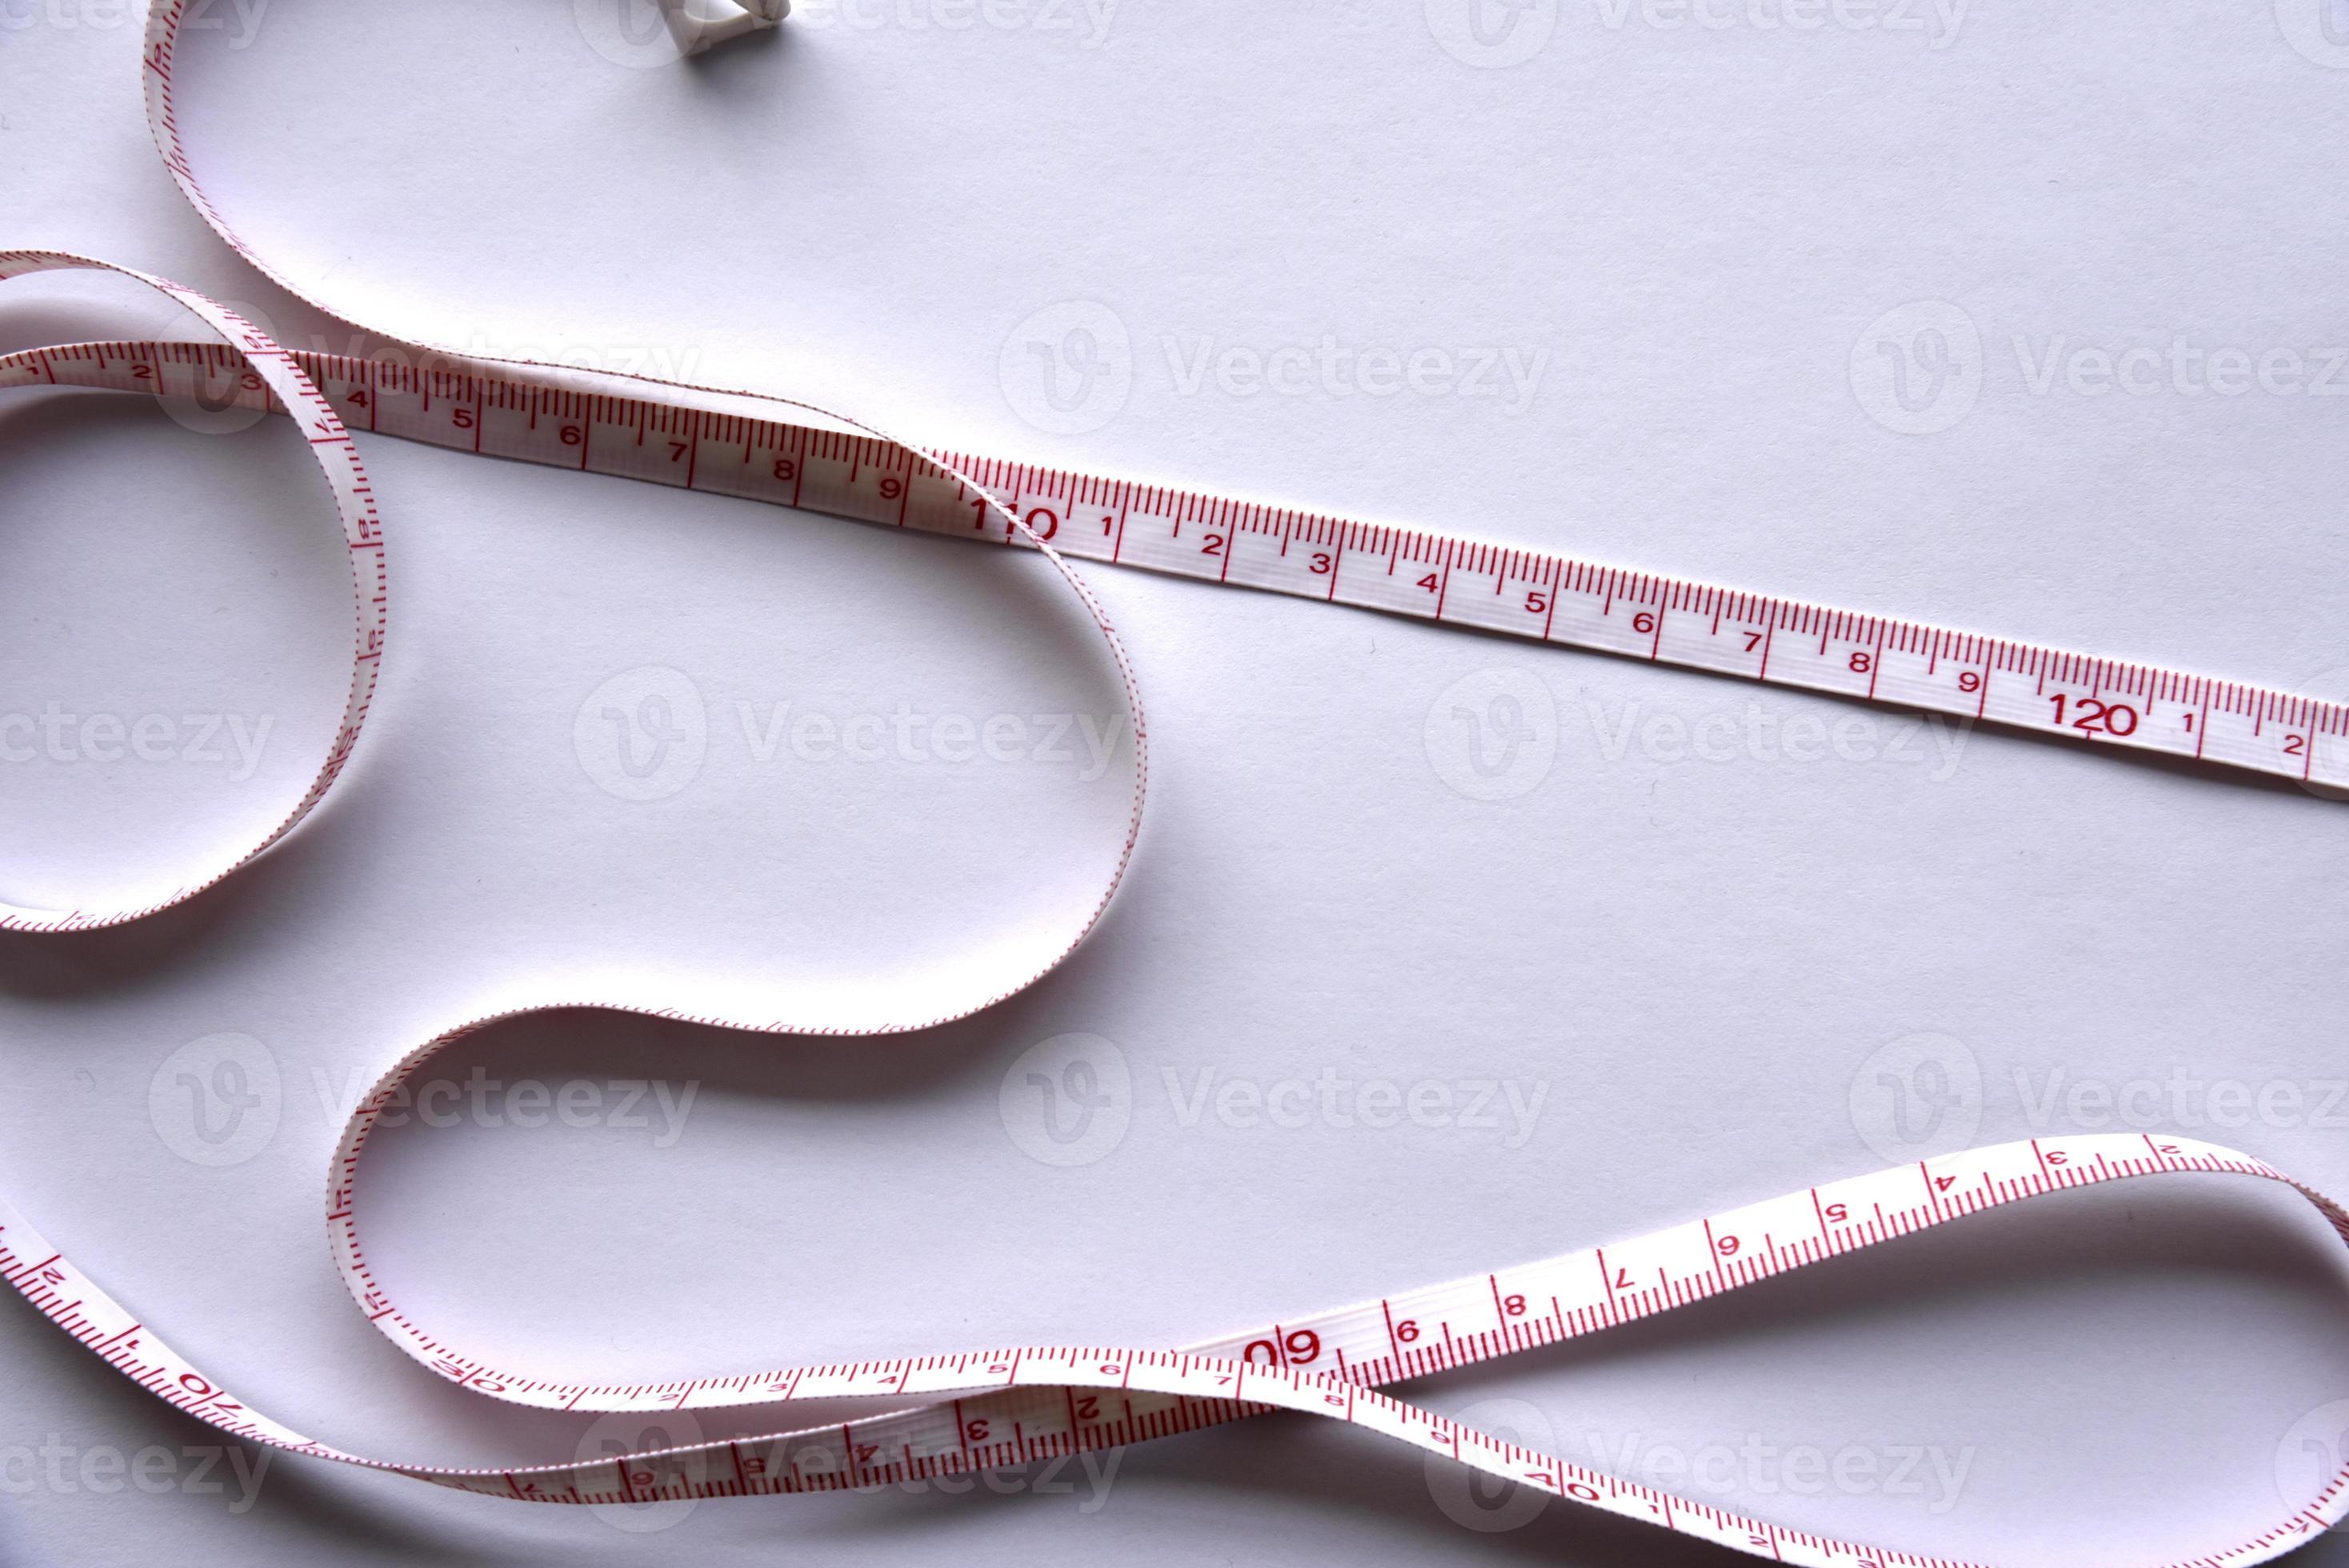 centímetro de costura cinta centimétrica cinta métrica de sastre sobre un  fondo blanco 6541934 Foto de stock en Vecteezy